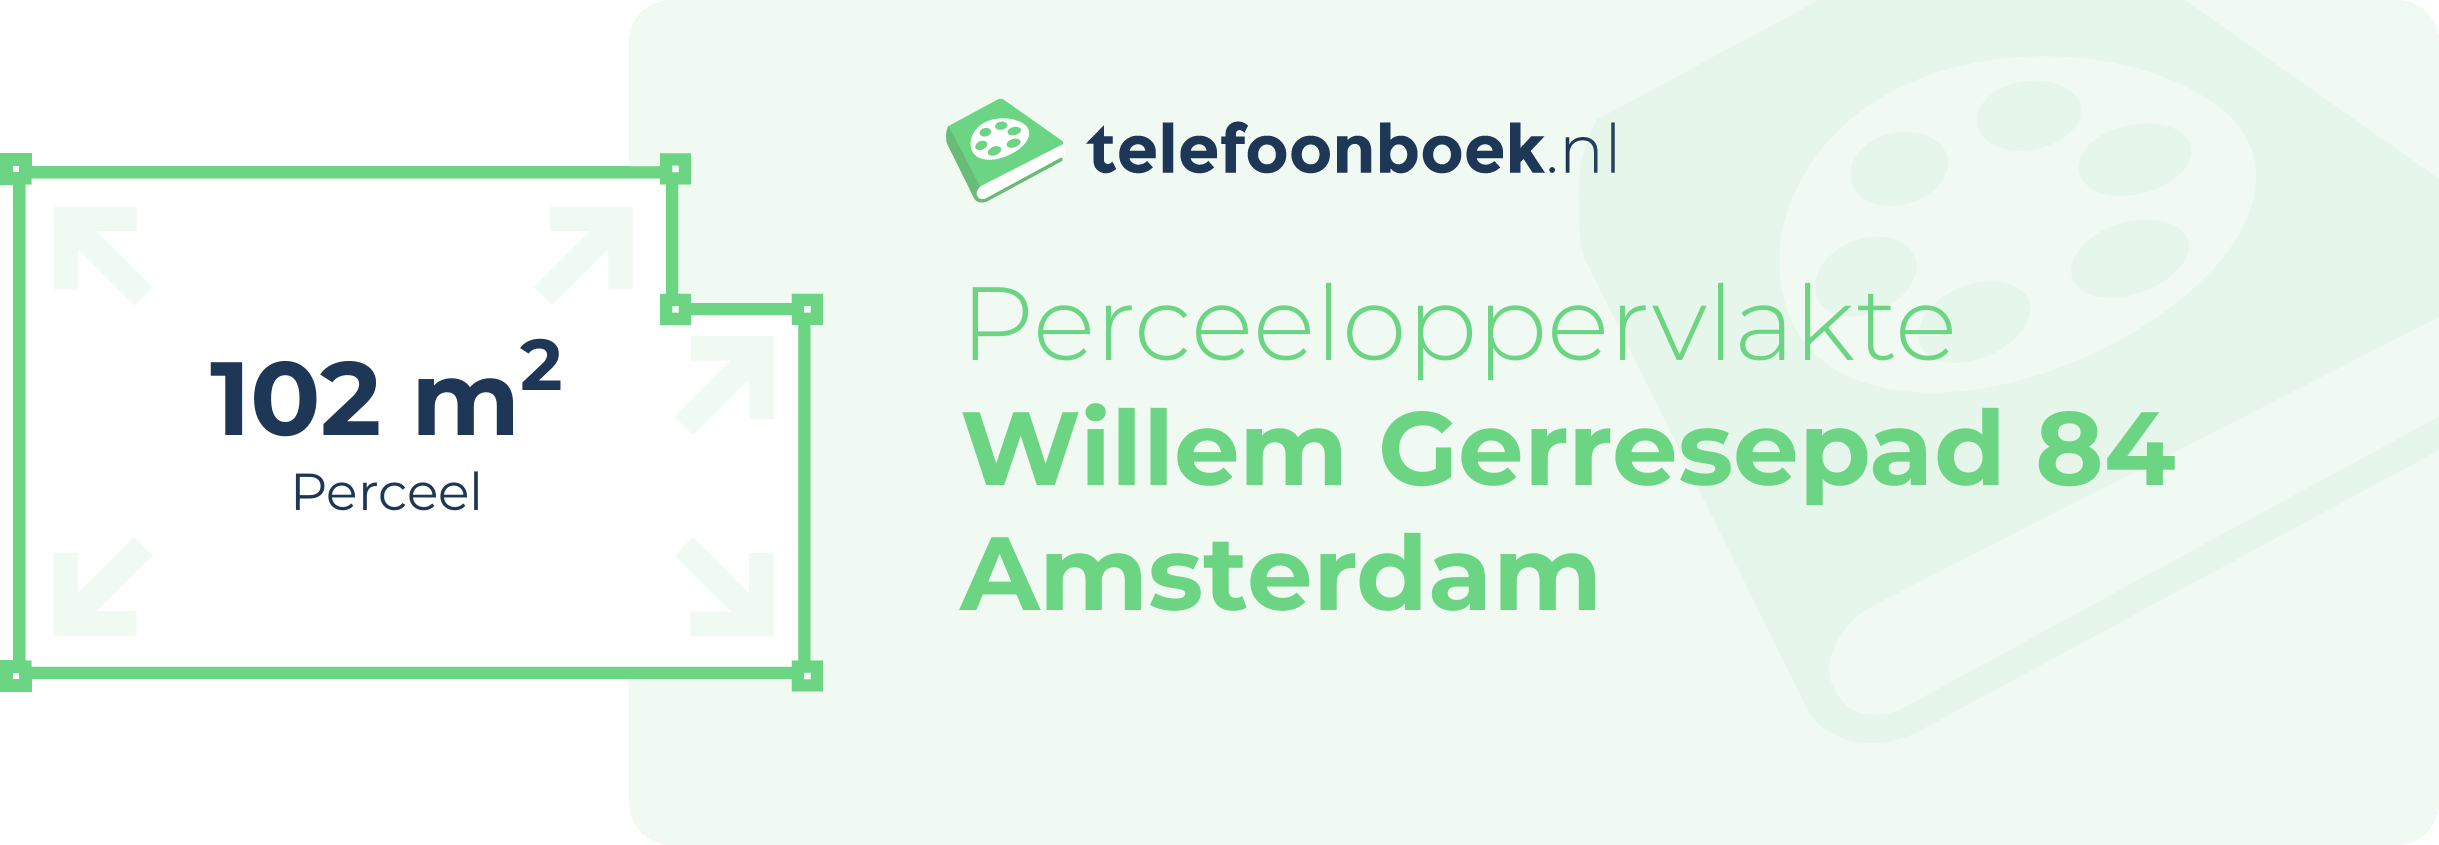 Perceeloppervlakte Willem Gerresepad 84 Amsterdam